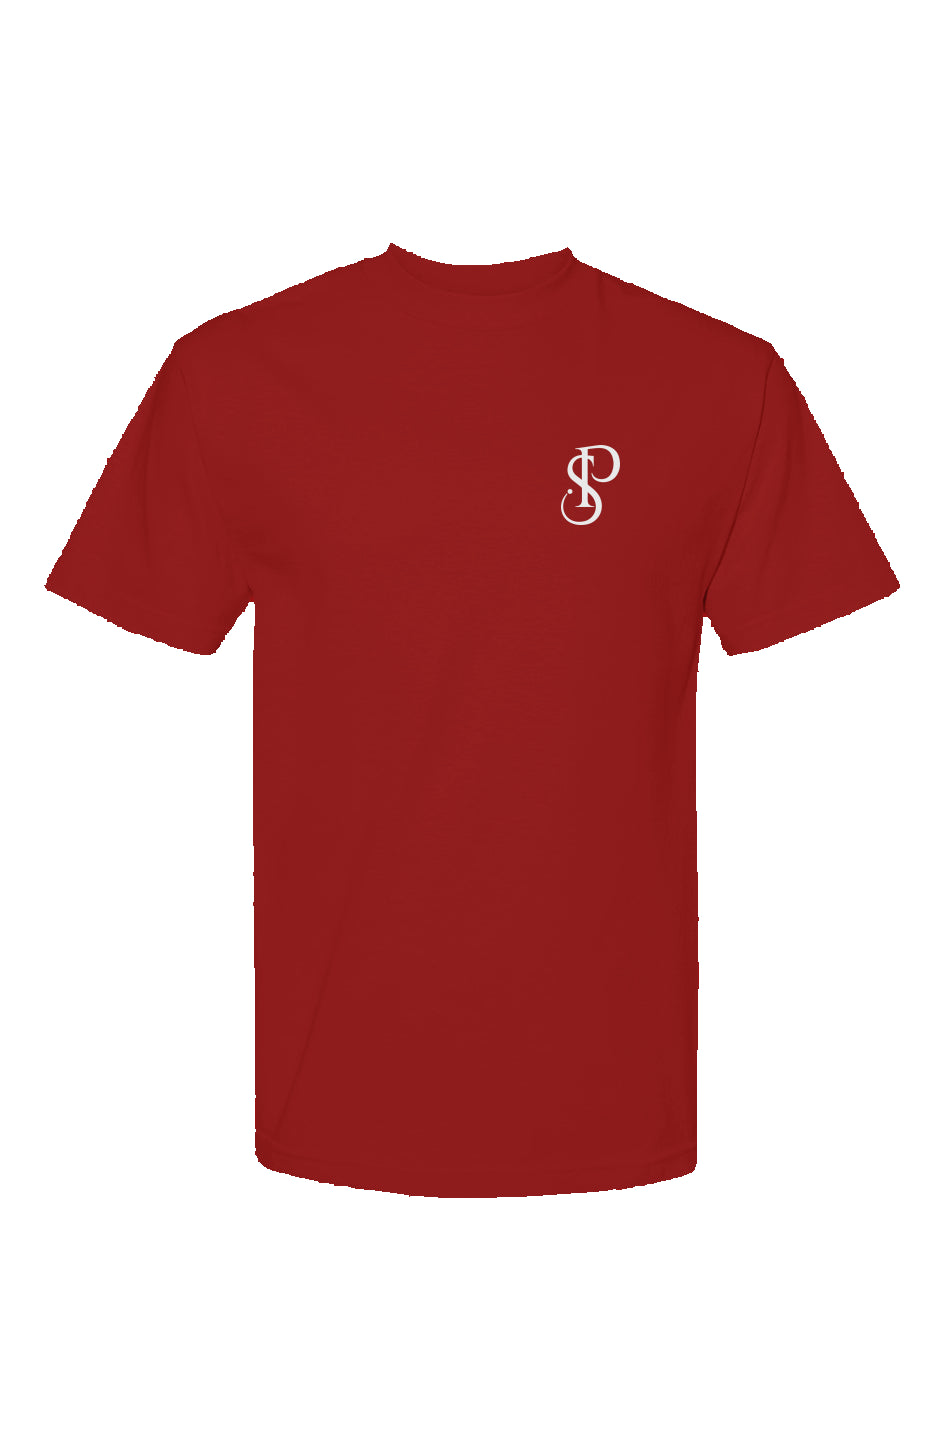 Society’s Product Classic T Shirt cardinal